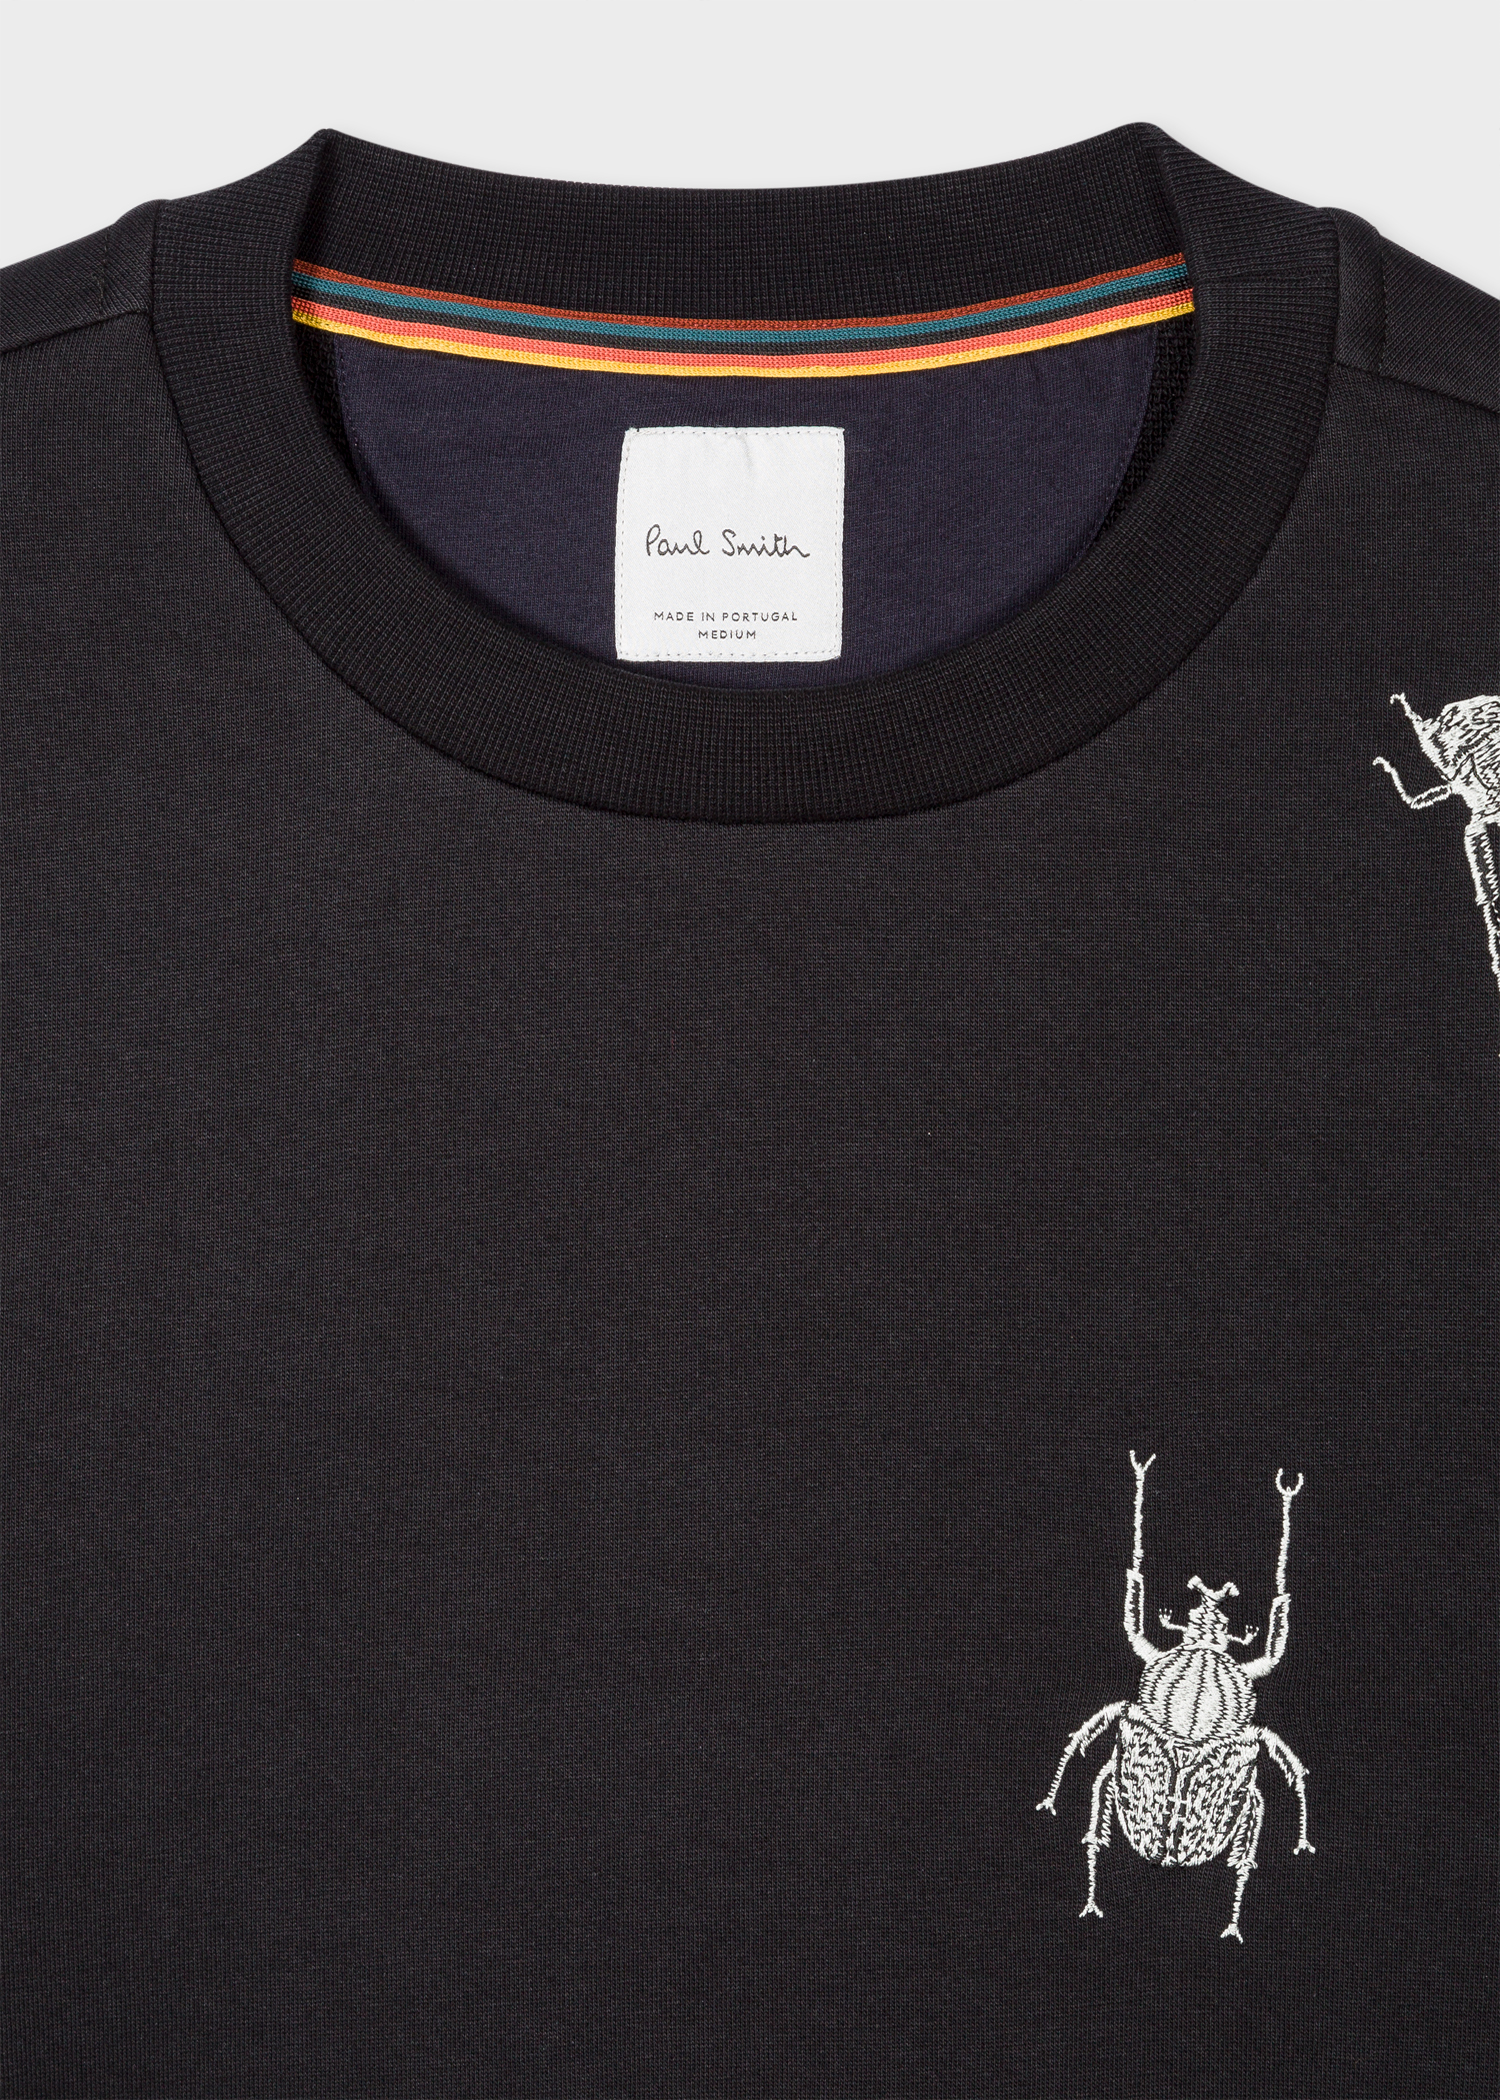 Collar view - Men's Black Embroidered 'Beetle' Sweatshirt Paul Smith